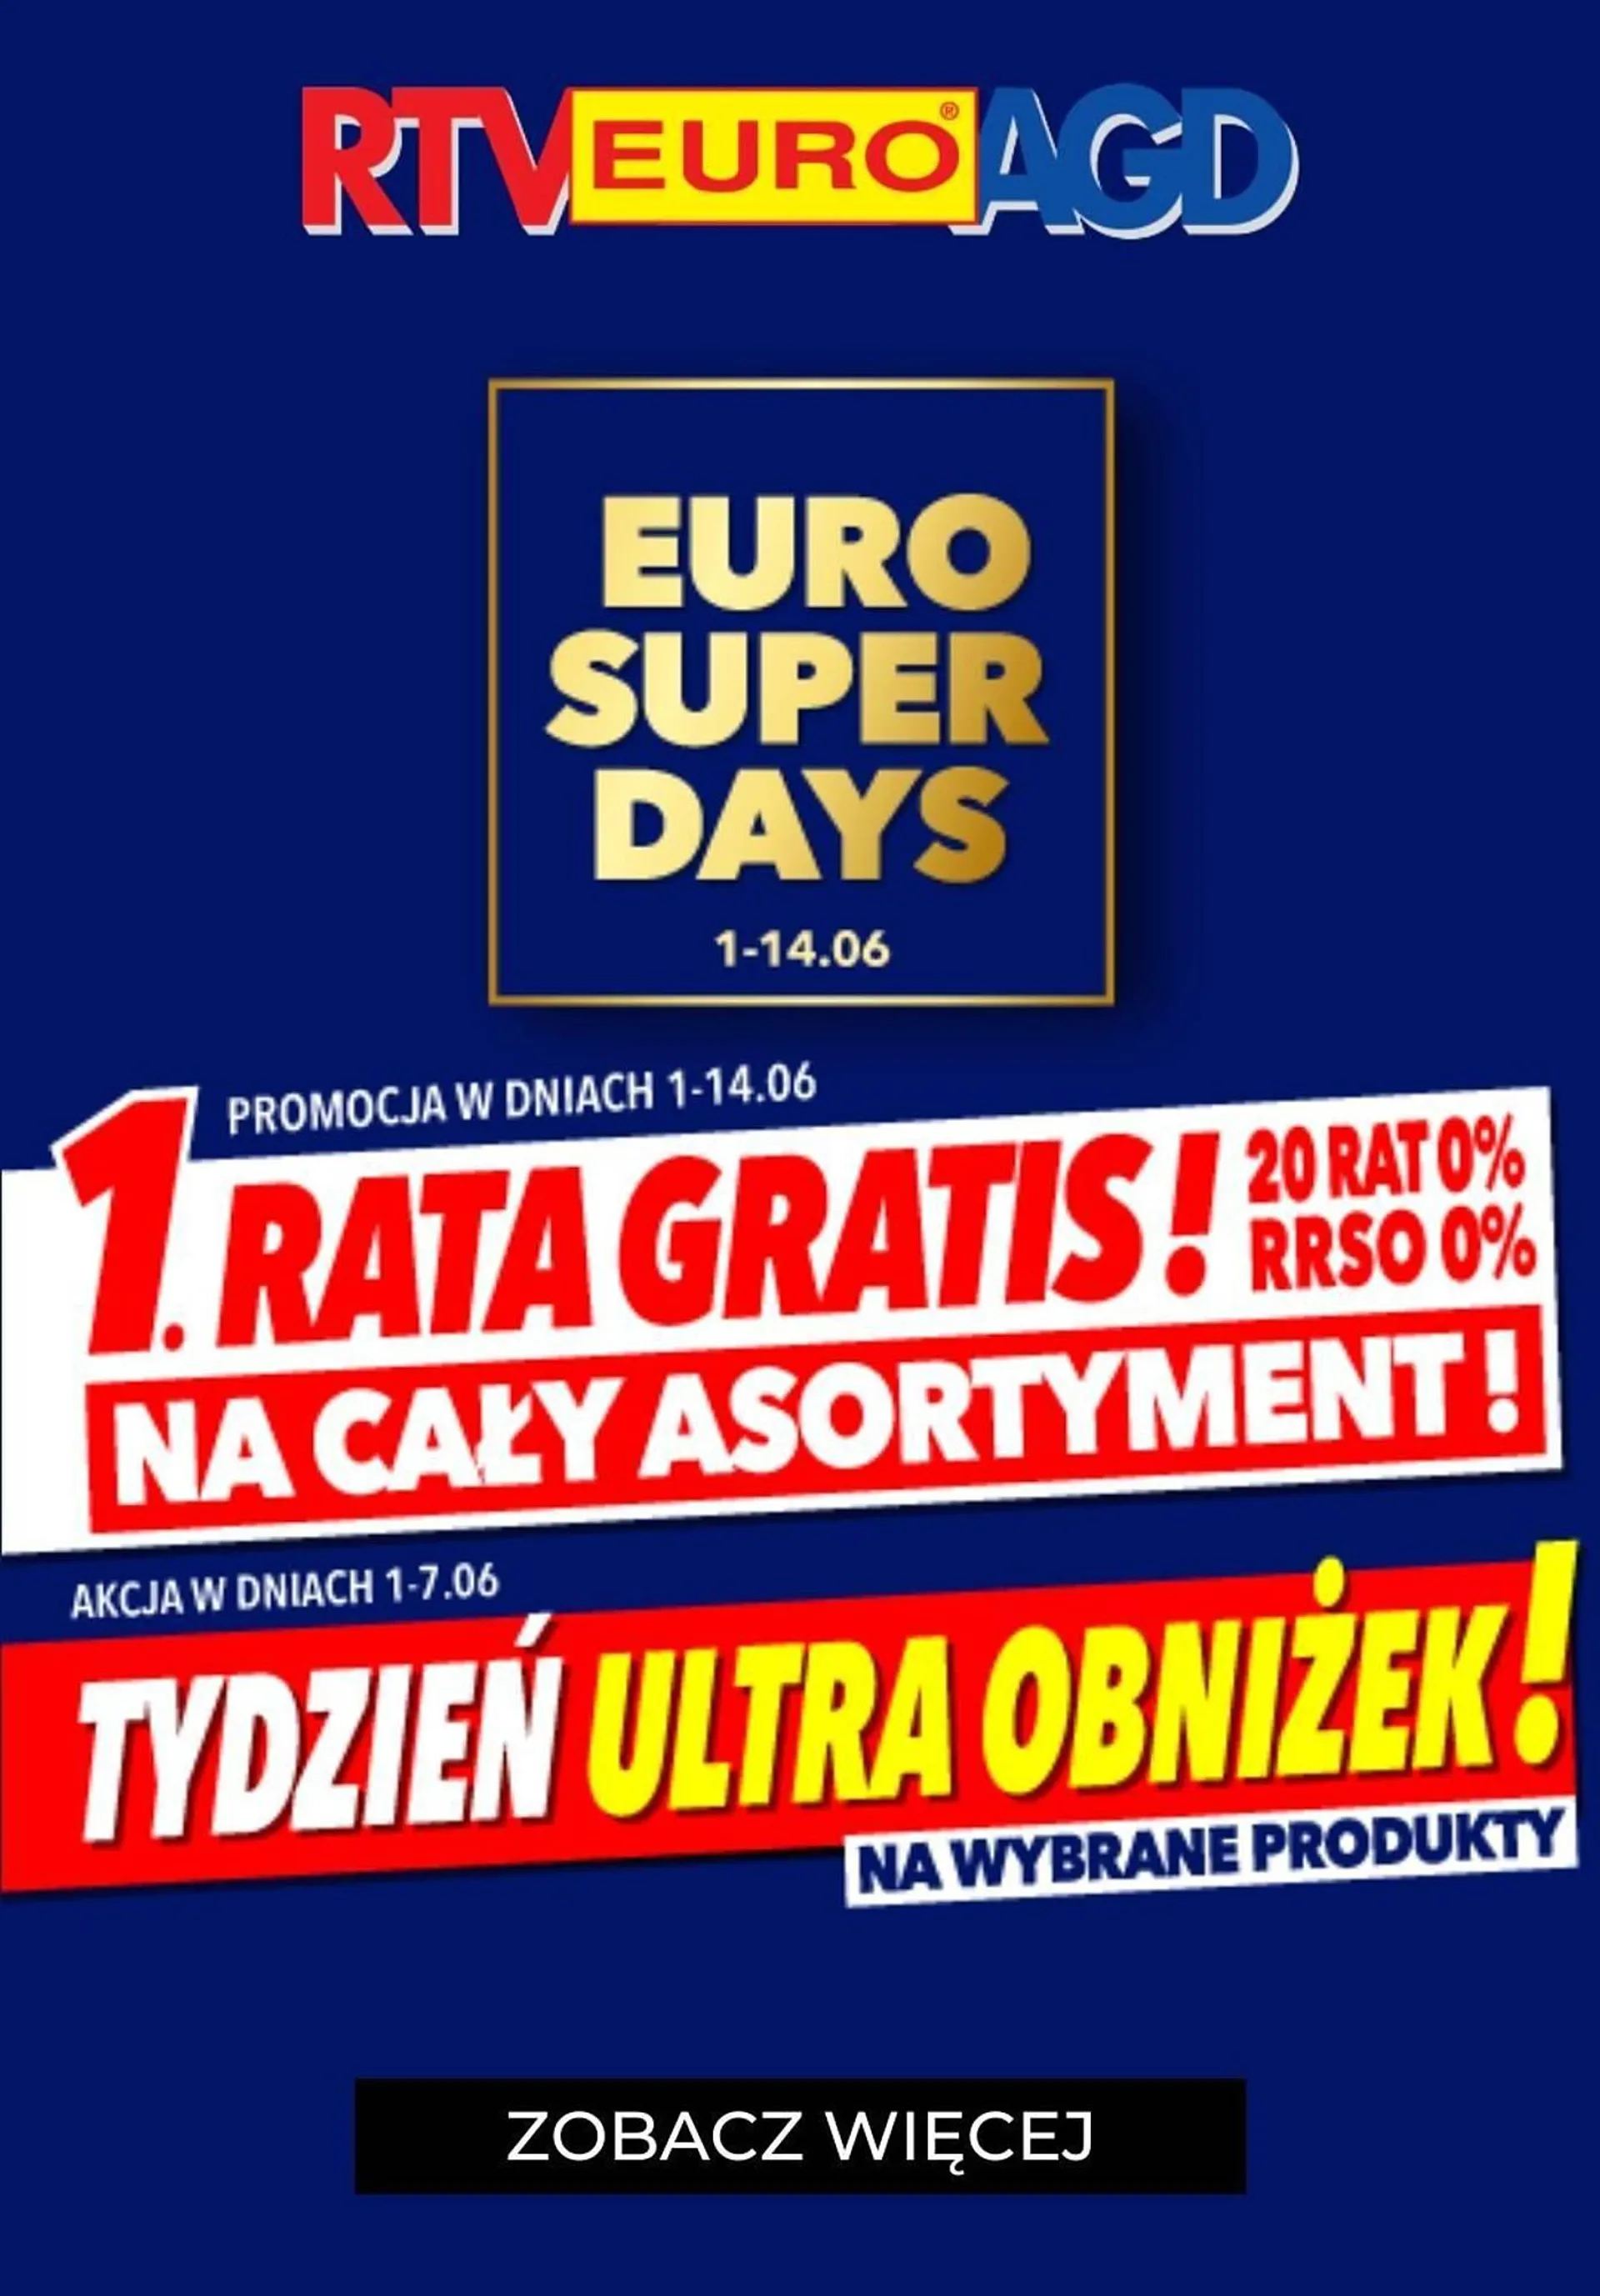 RTV EURO AGD gazetka